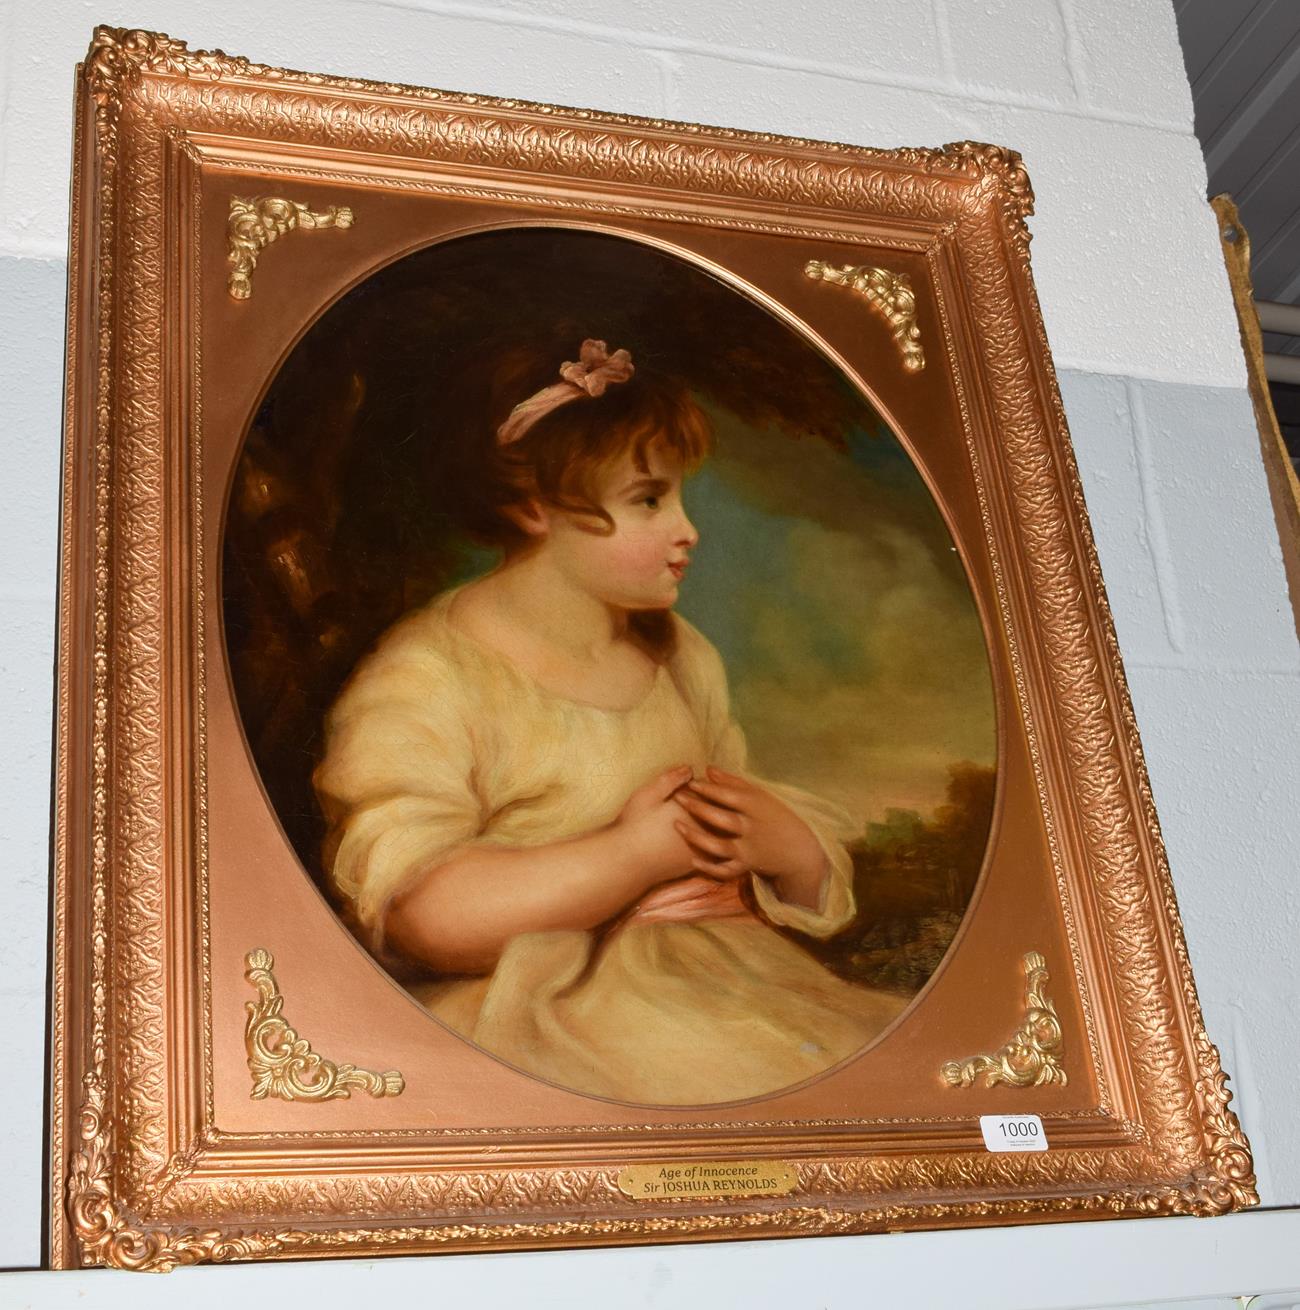 After Sir Joshua Reynolds PRA FRS FRSA (1723-1792), ''The Age of Innocence'', oil on canvas, 47cm